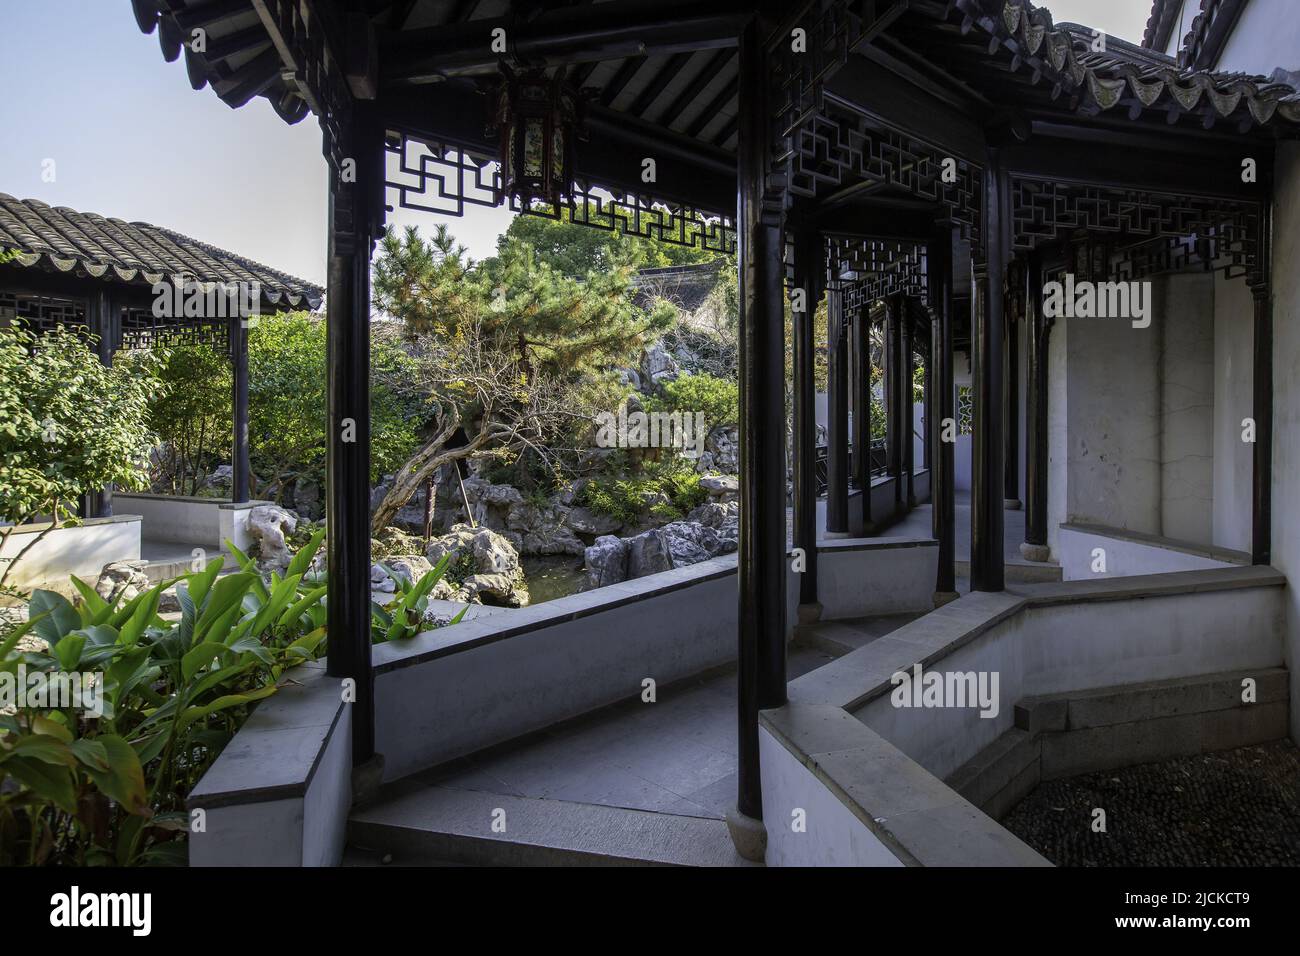 Yans garden in suzhou Stock Photo